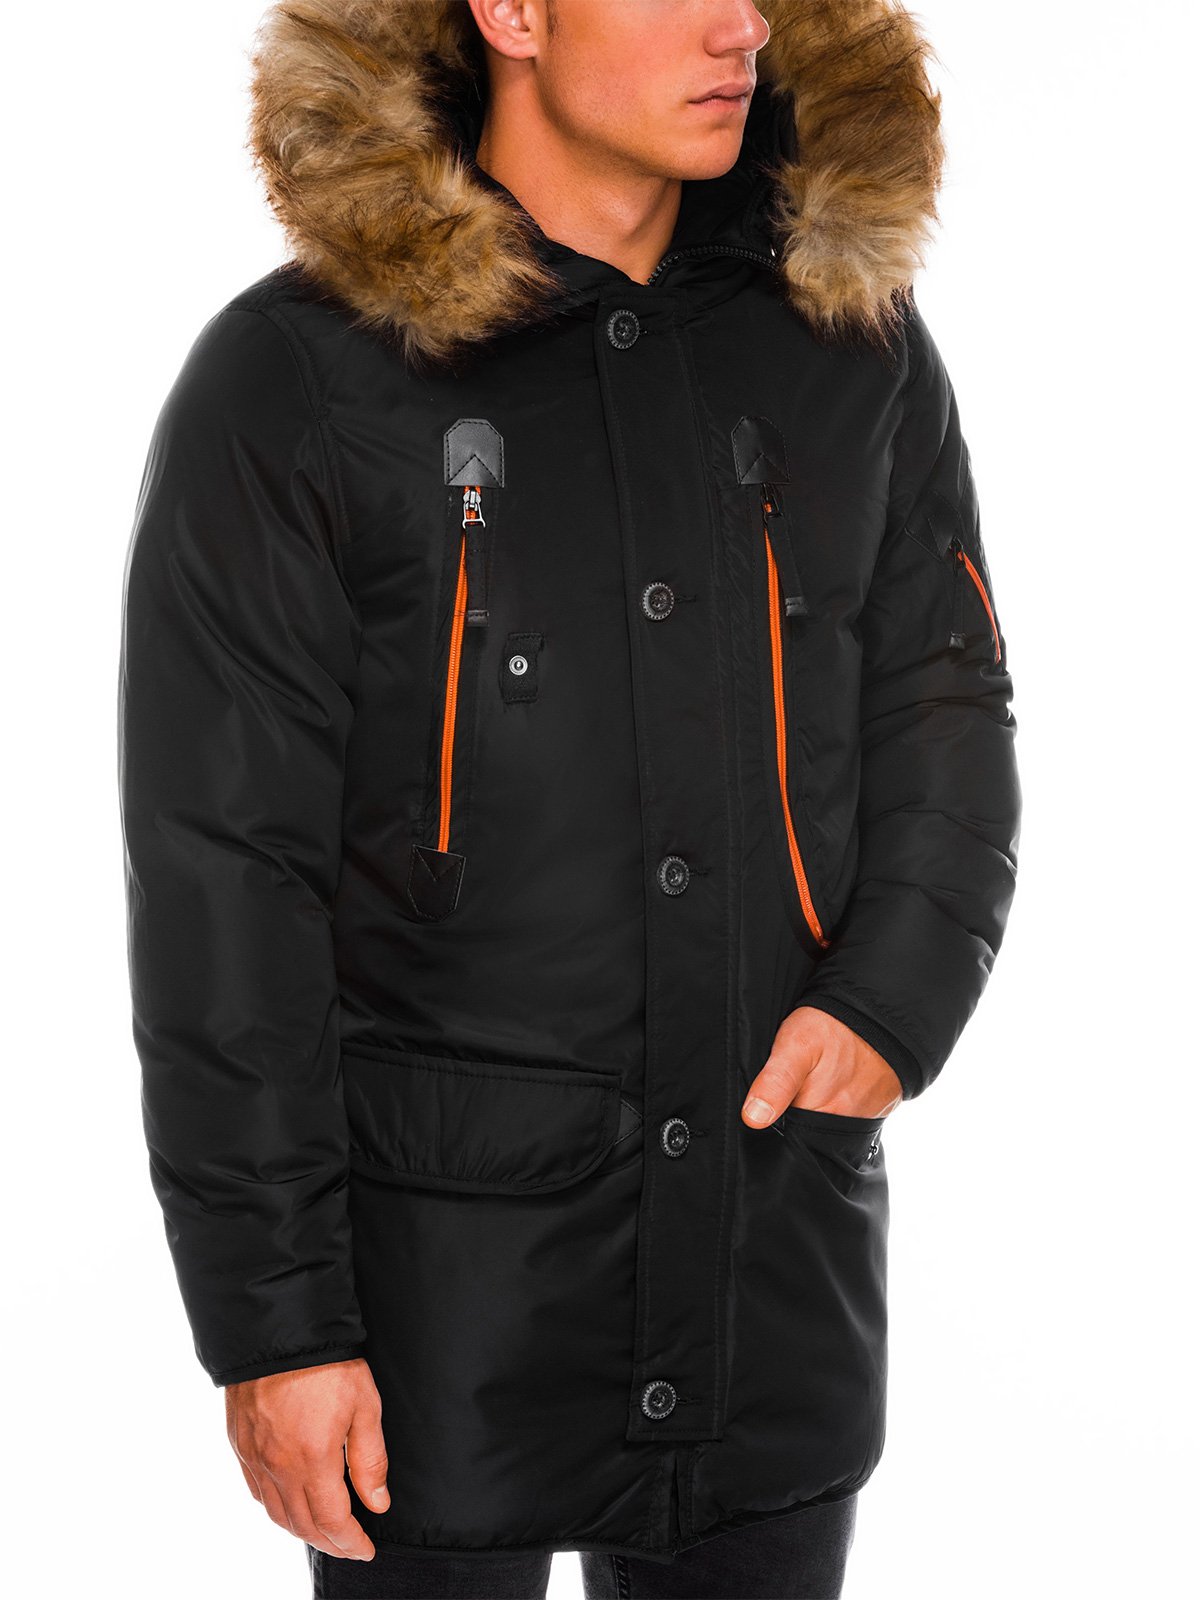 Men's winter parka jacket C369 - black | MODONE wholesale - Clothing ...